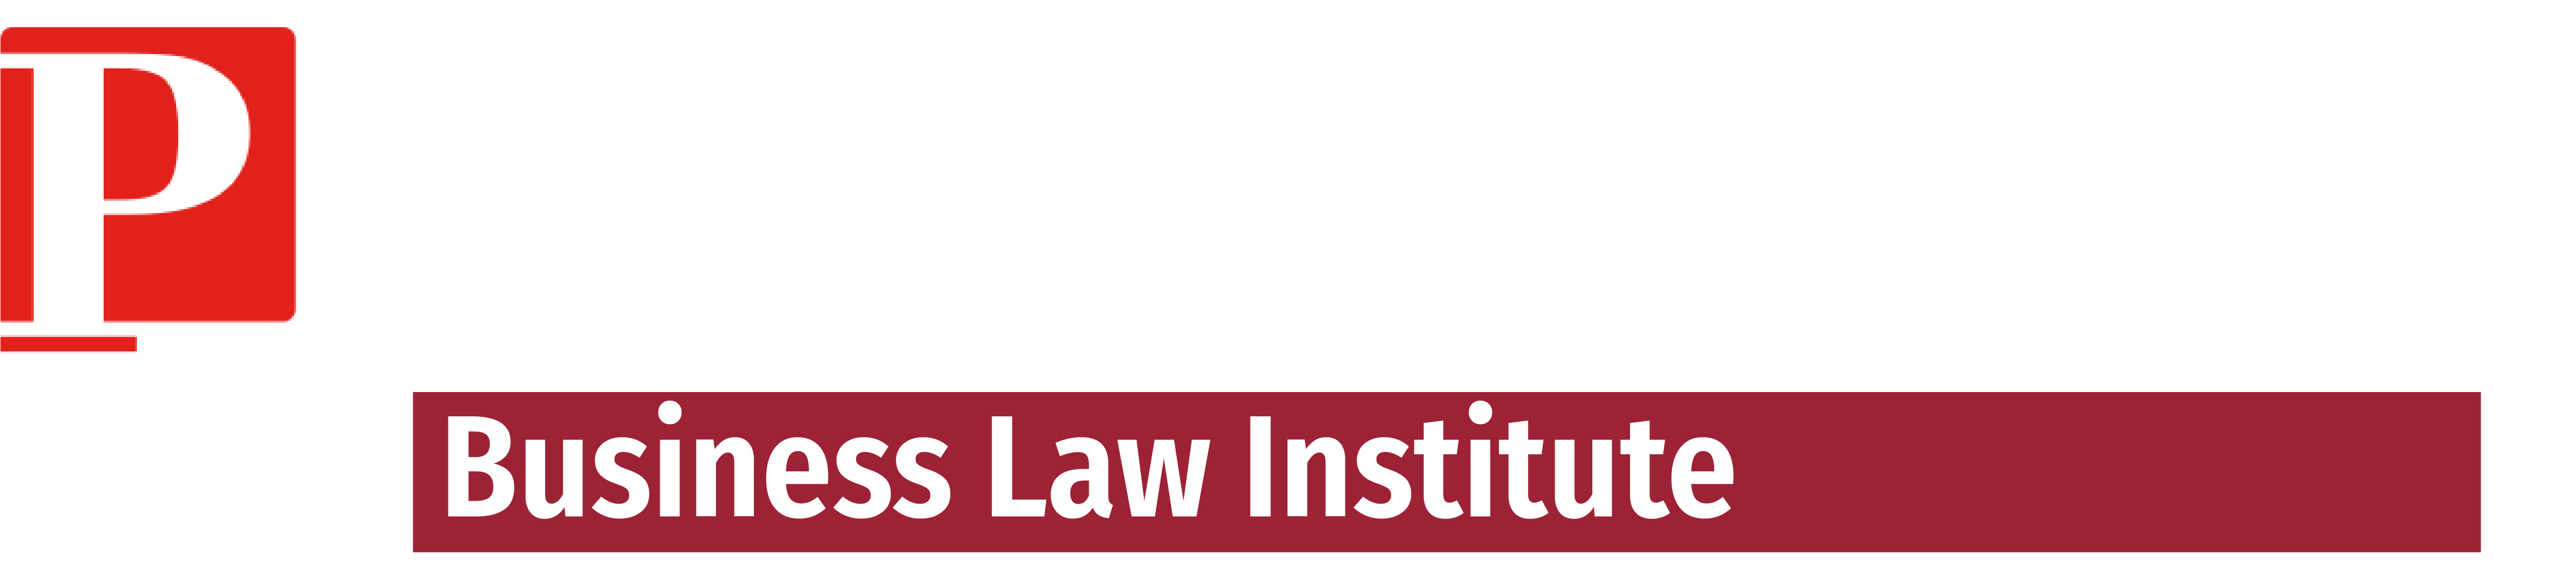 Primerus Business Law Institute Logo - White